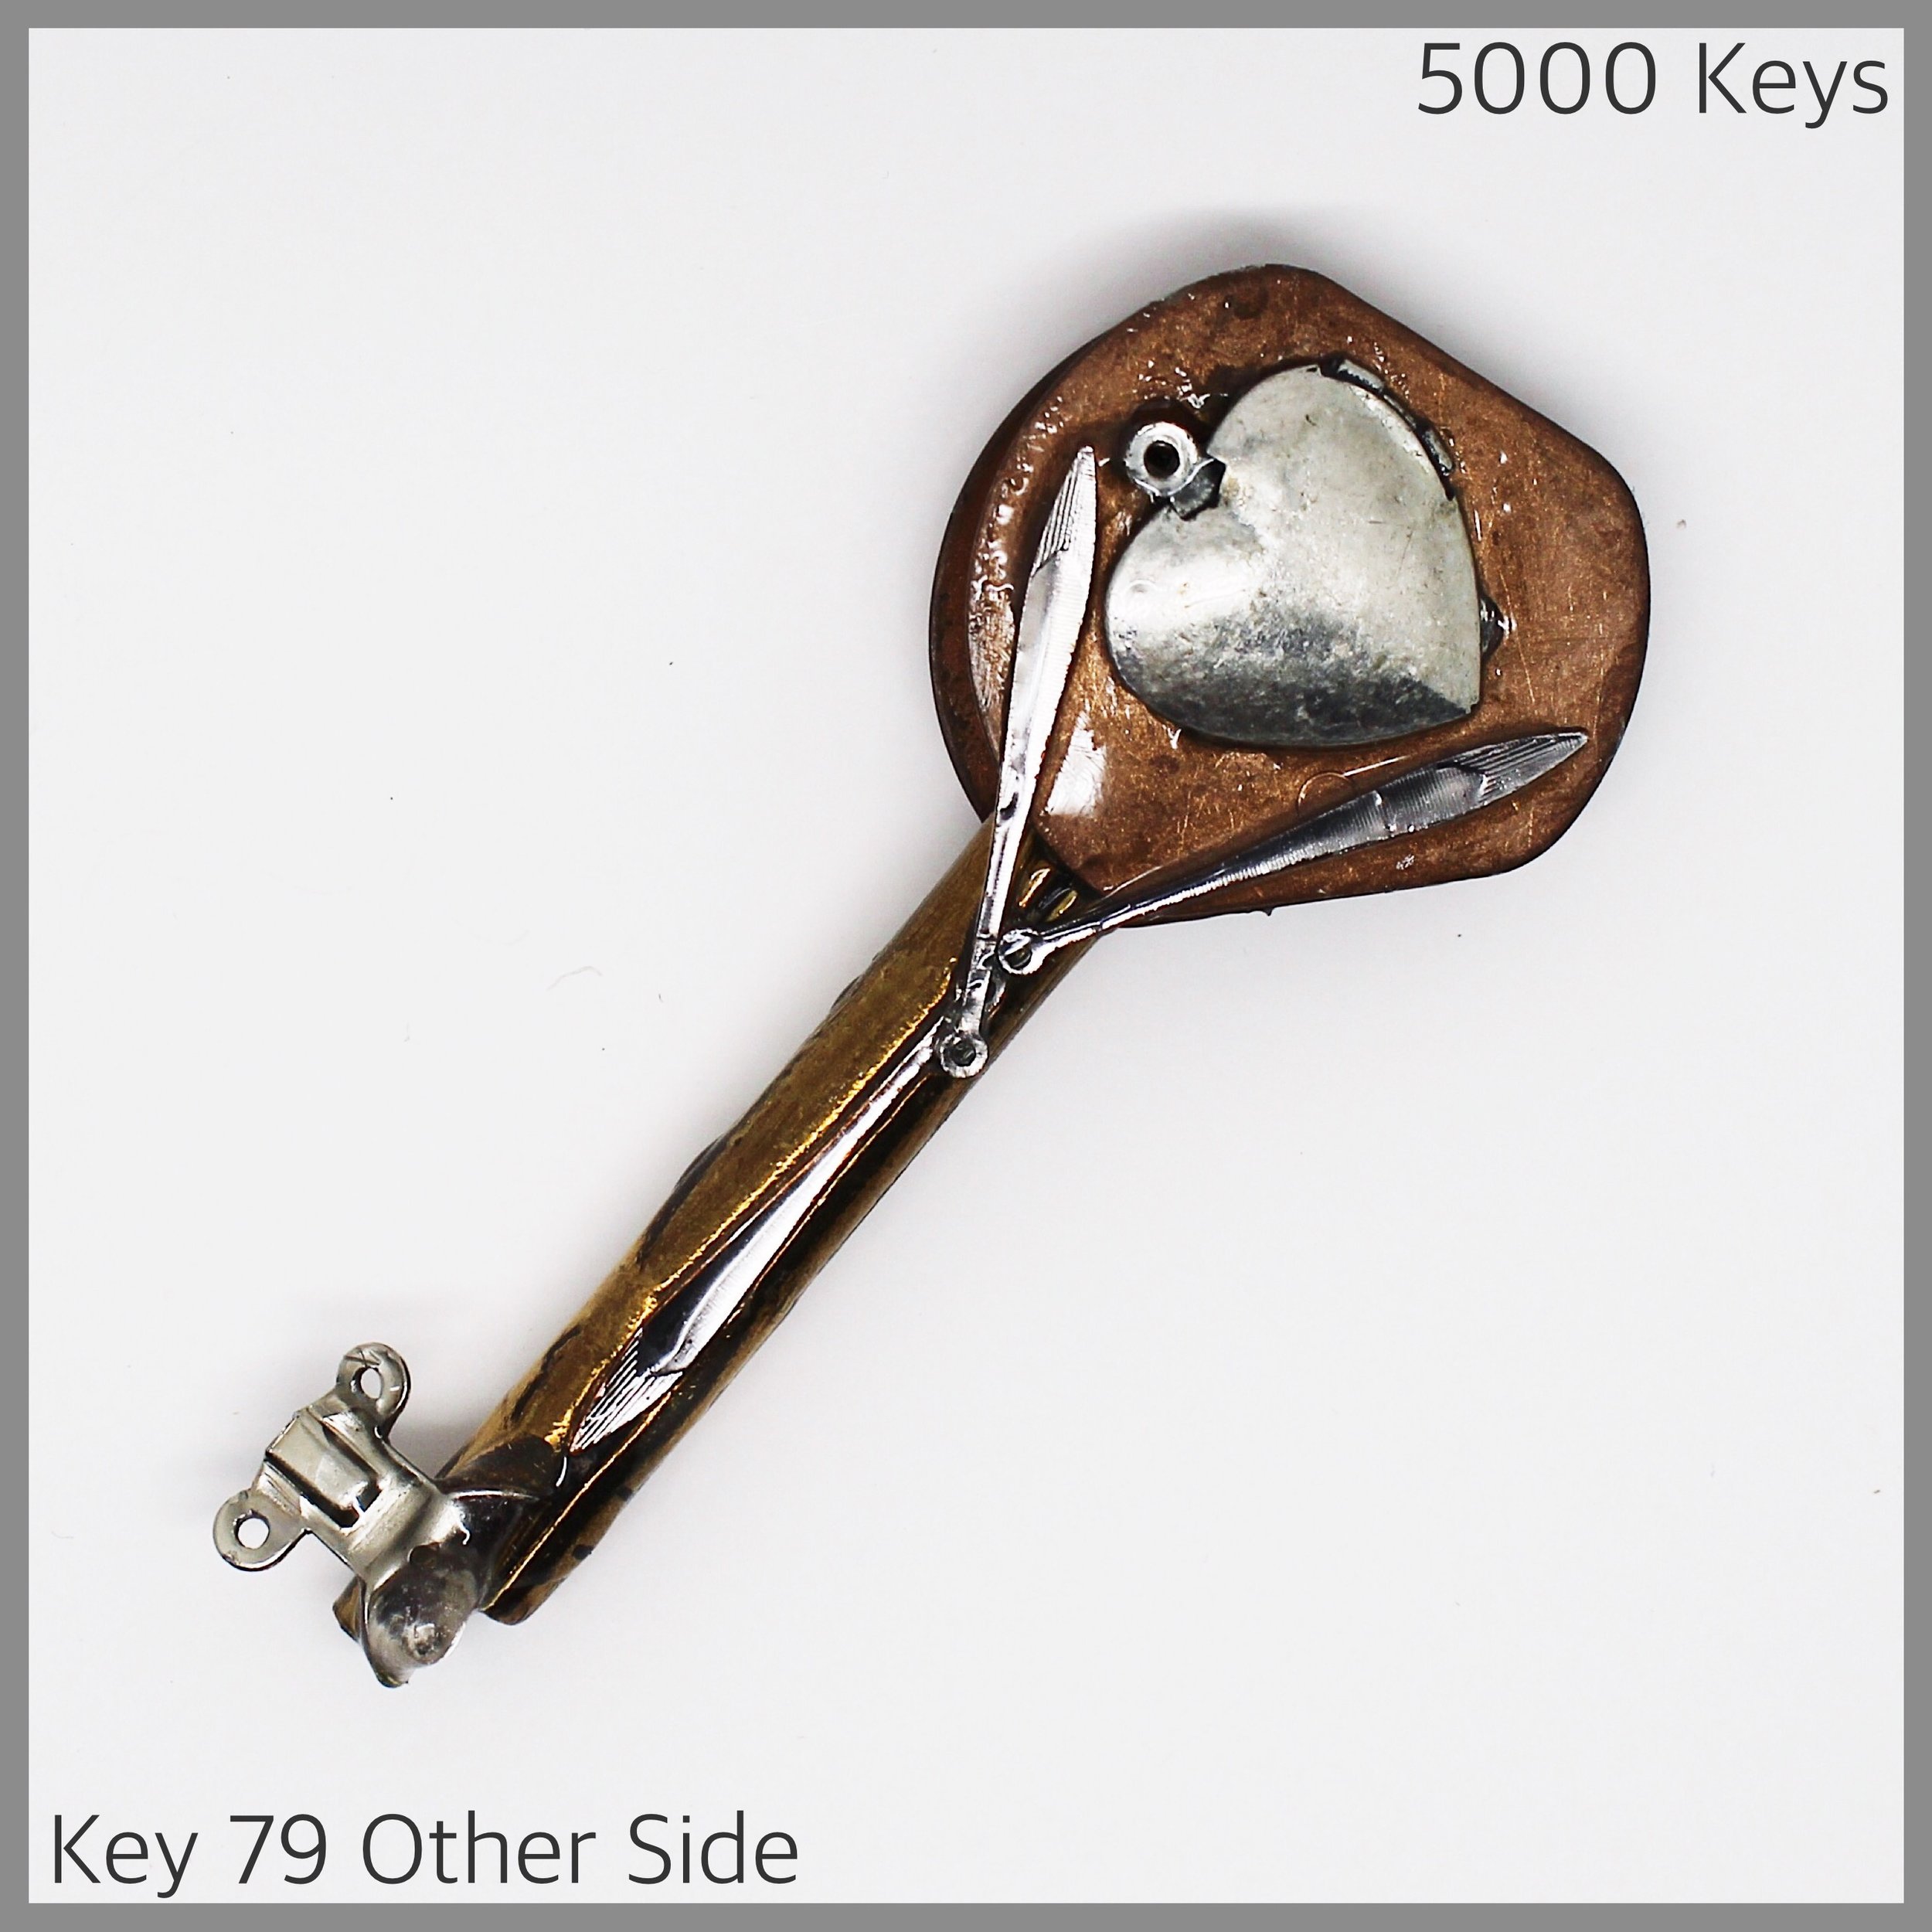 Key 79 other side - 1.JPG